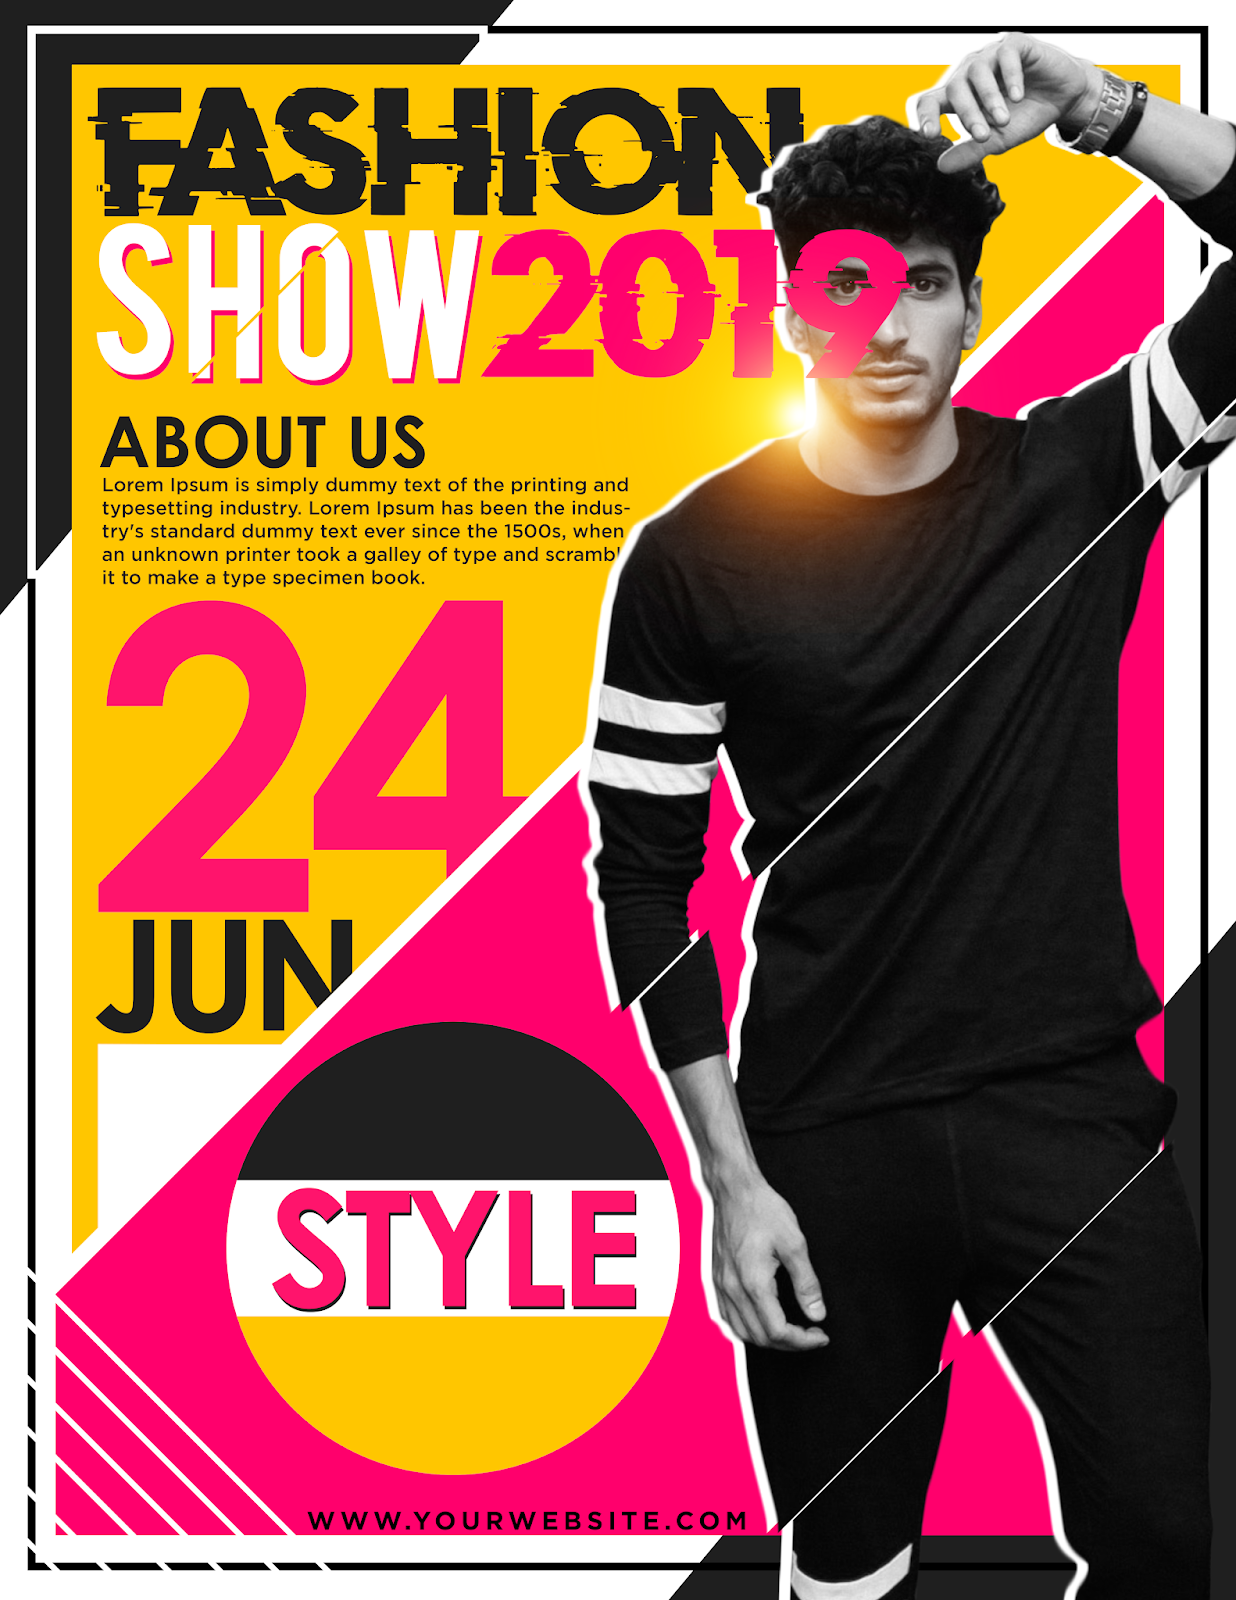 How To Design Fashion Poster | Fashion Flyer Design | Photoshop ...